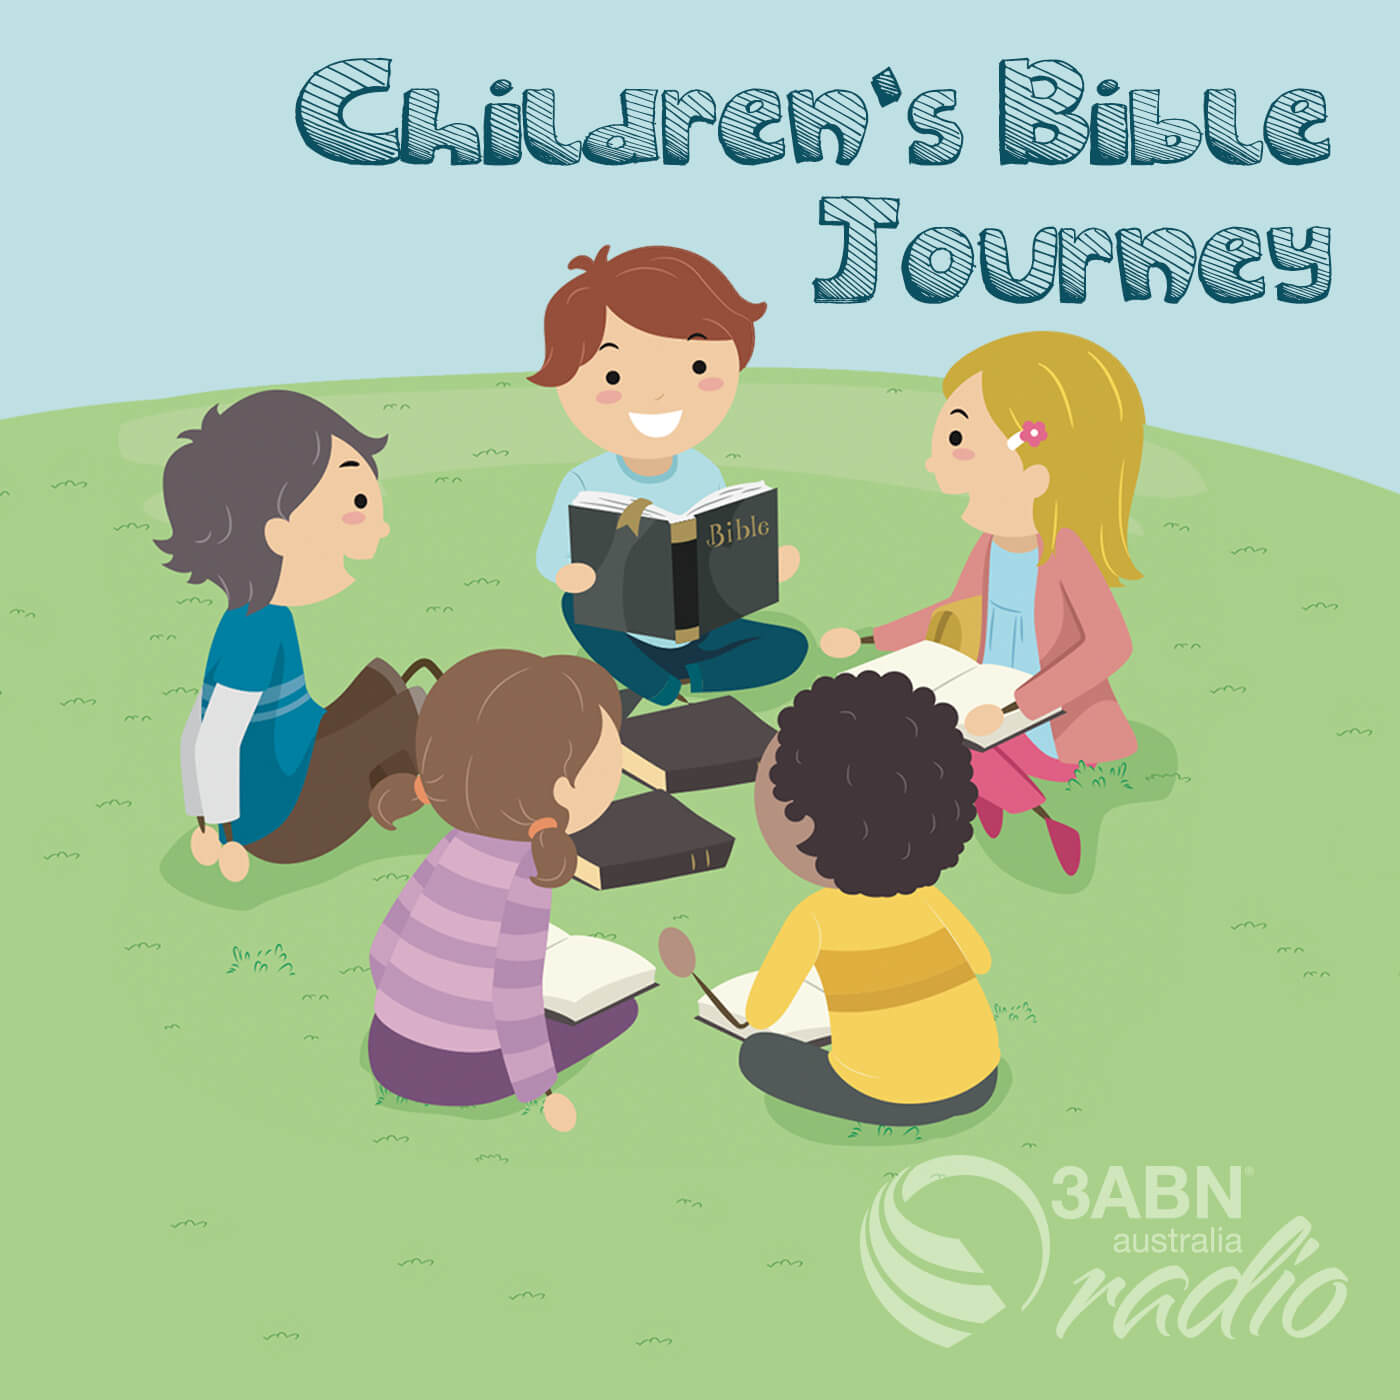 Children's Bible Journey - 2120